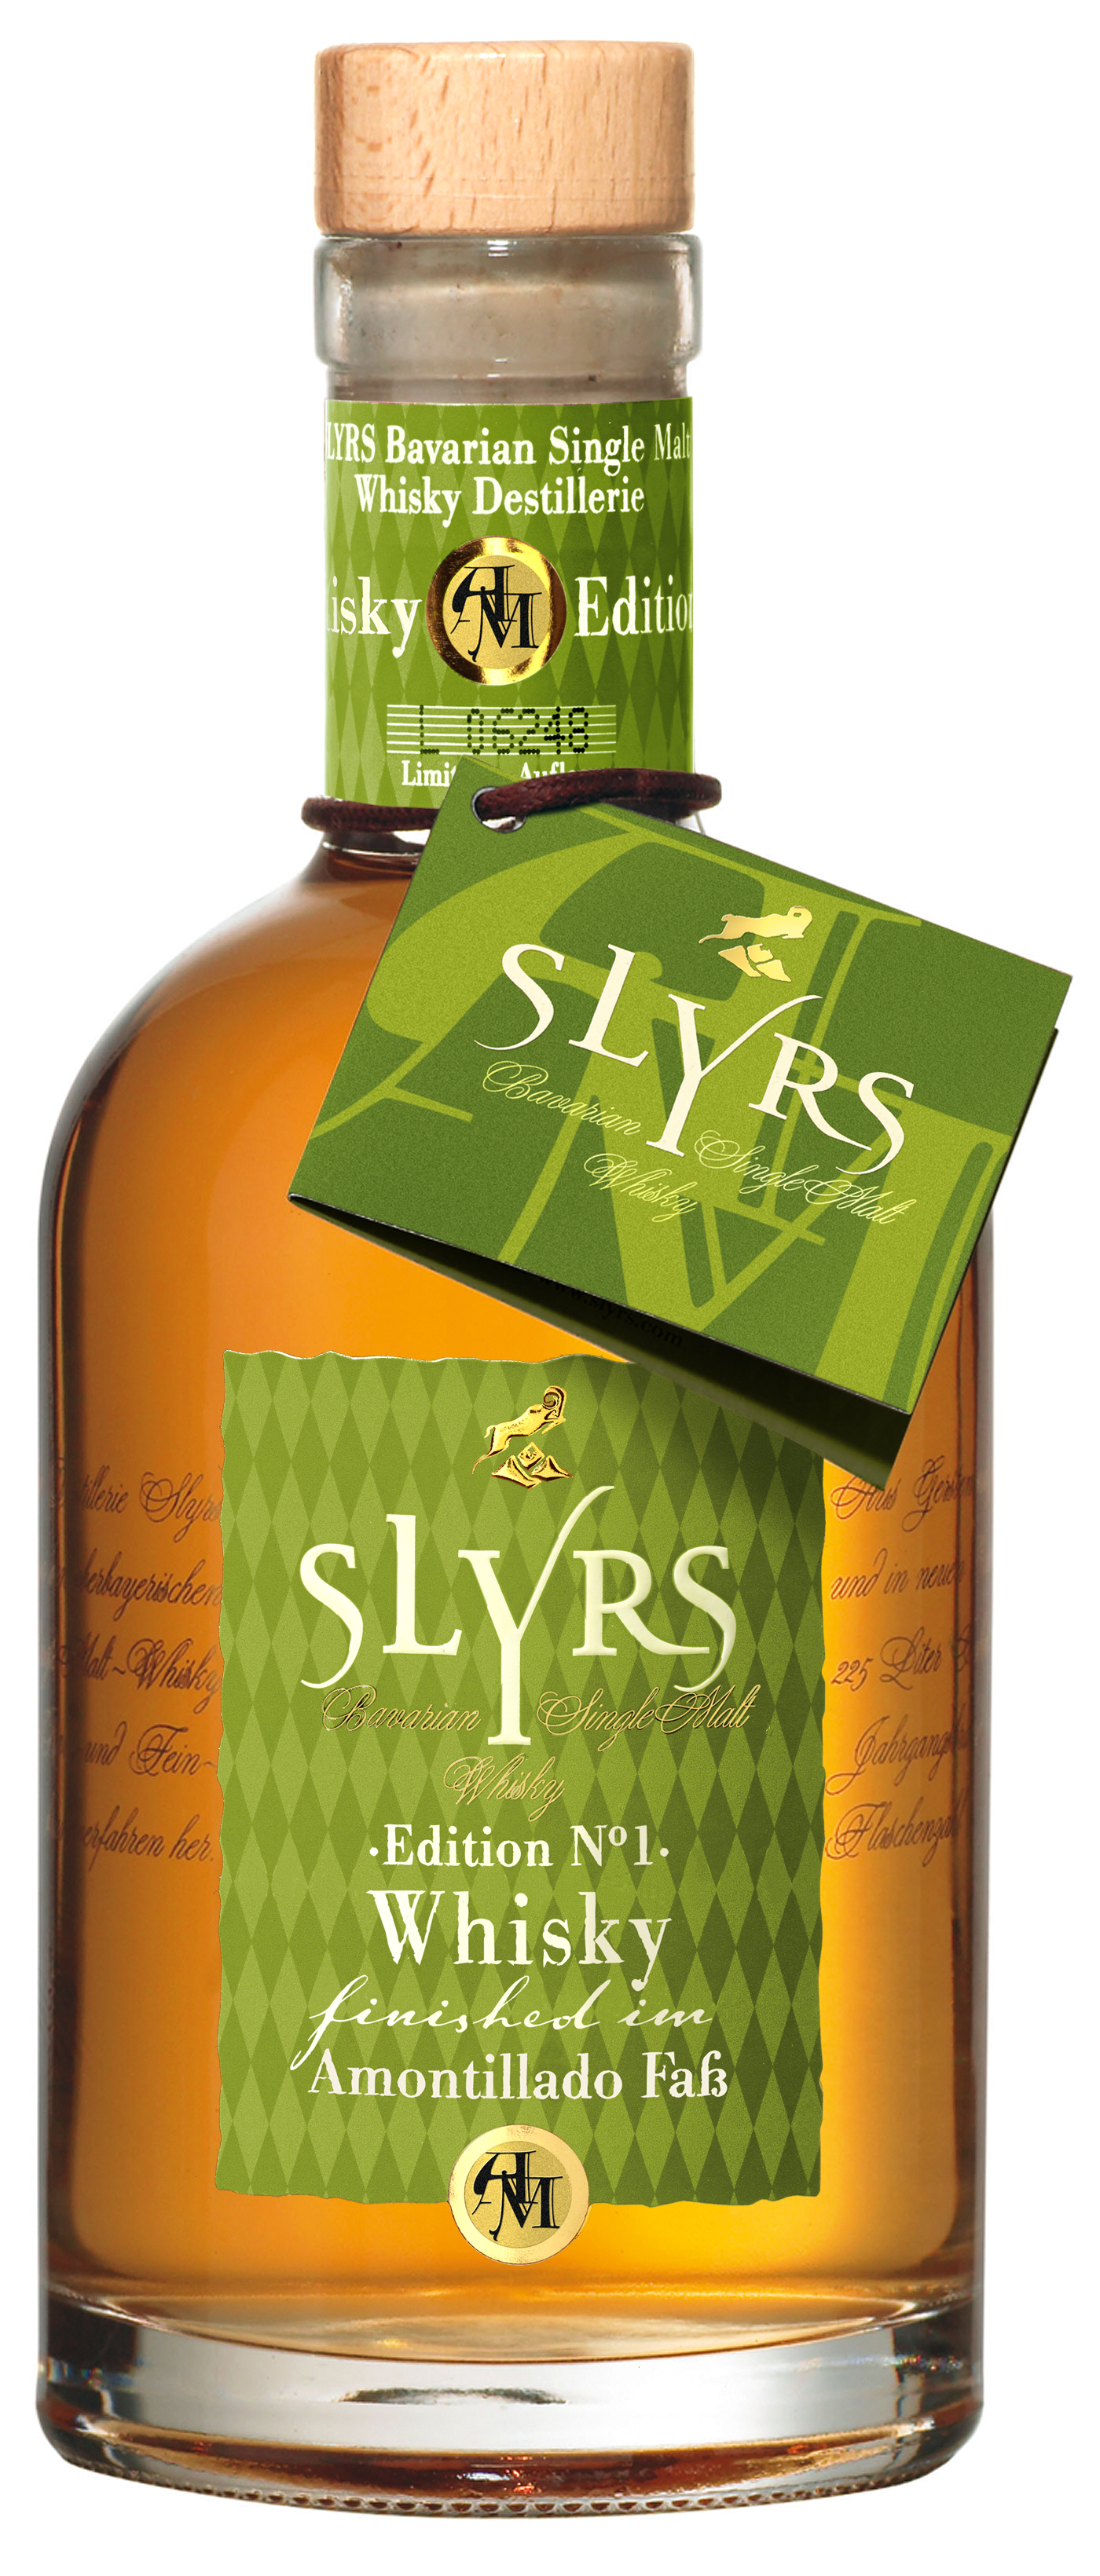 Slyrs Whisky Amontillado finished Edition No.1